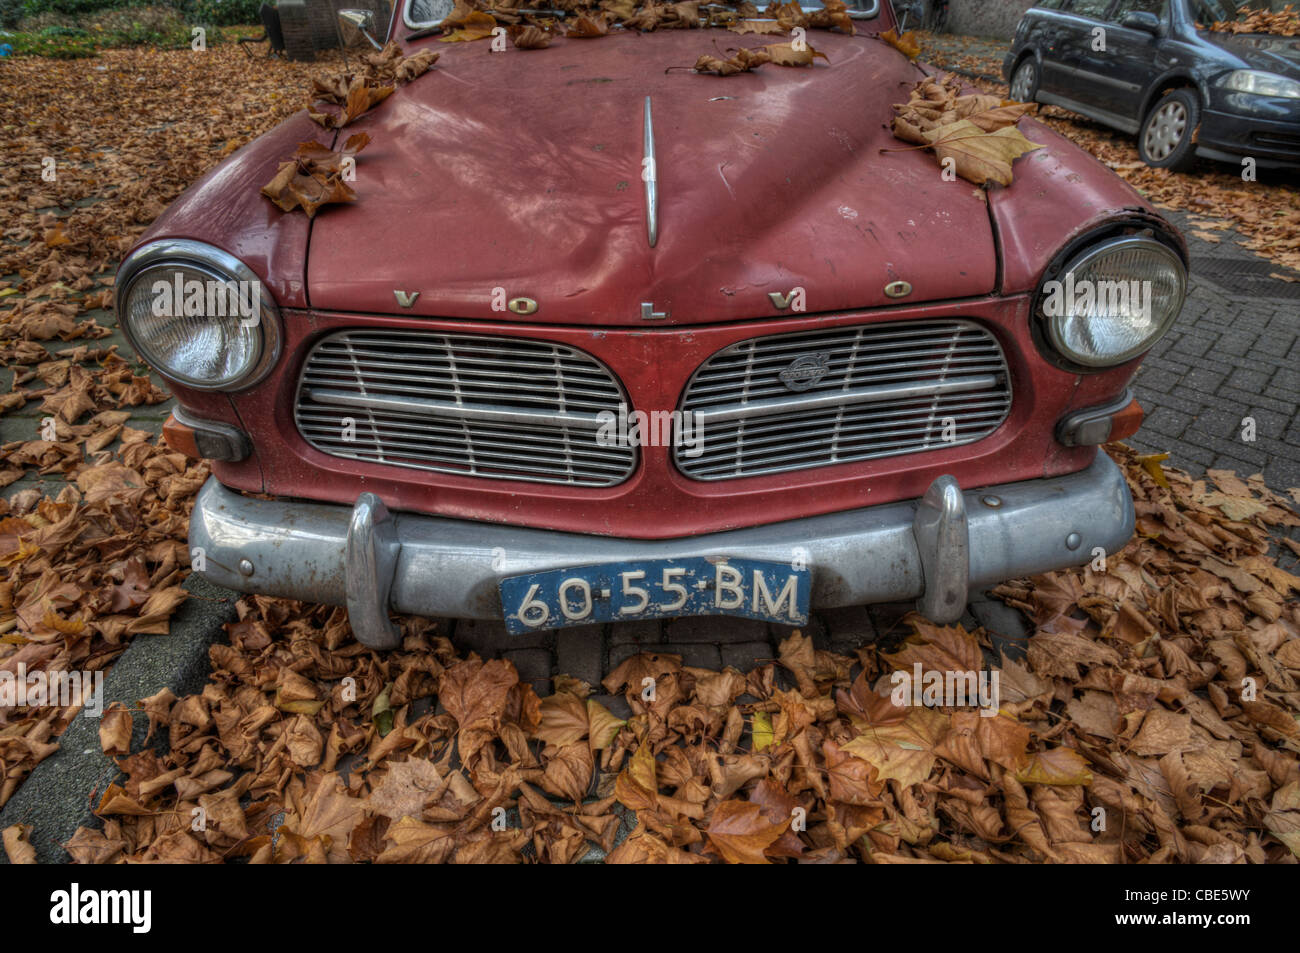 Volvo classic car in autumn Stock Photo